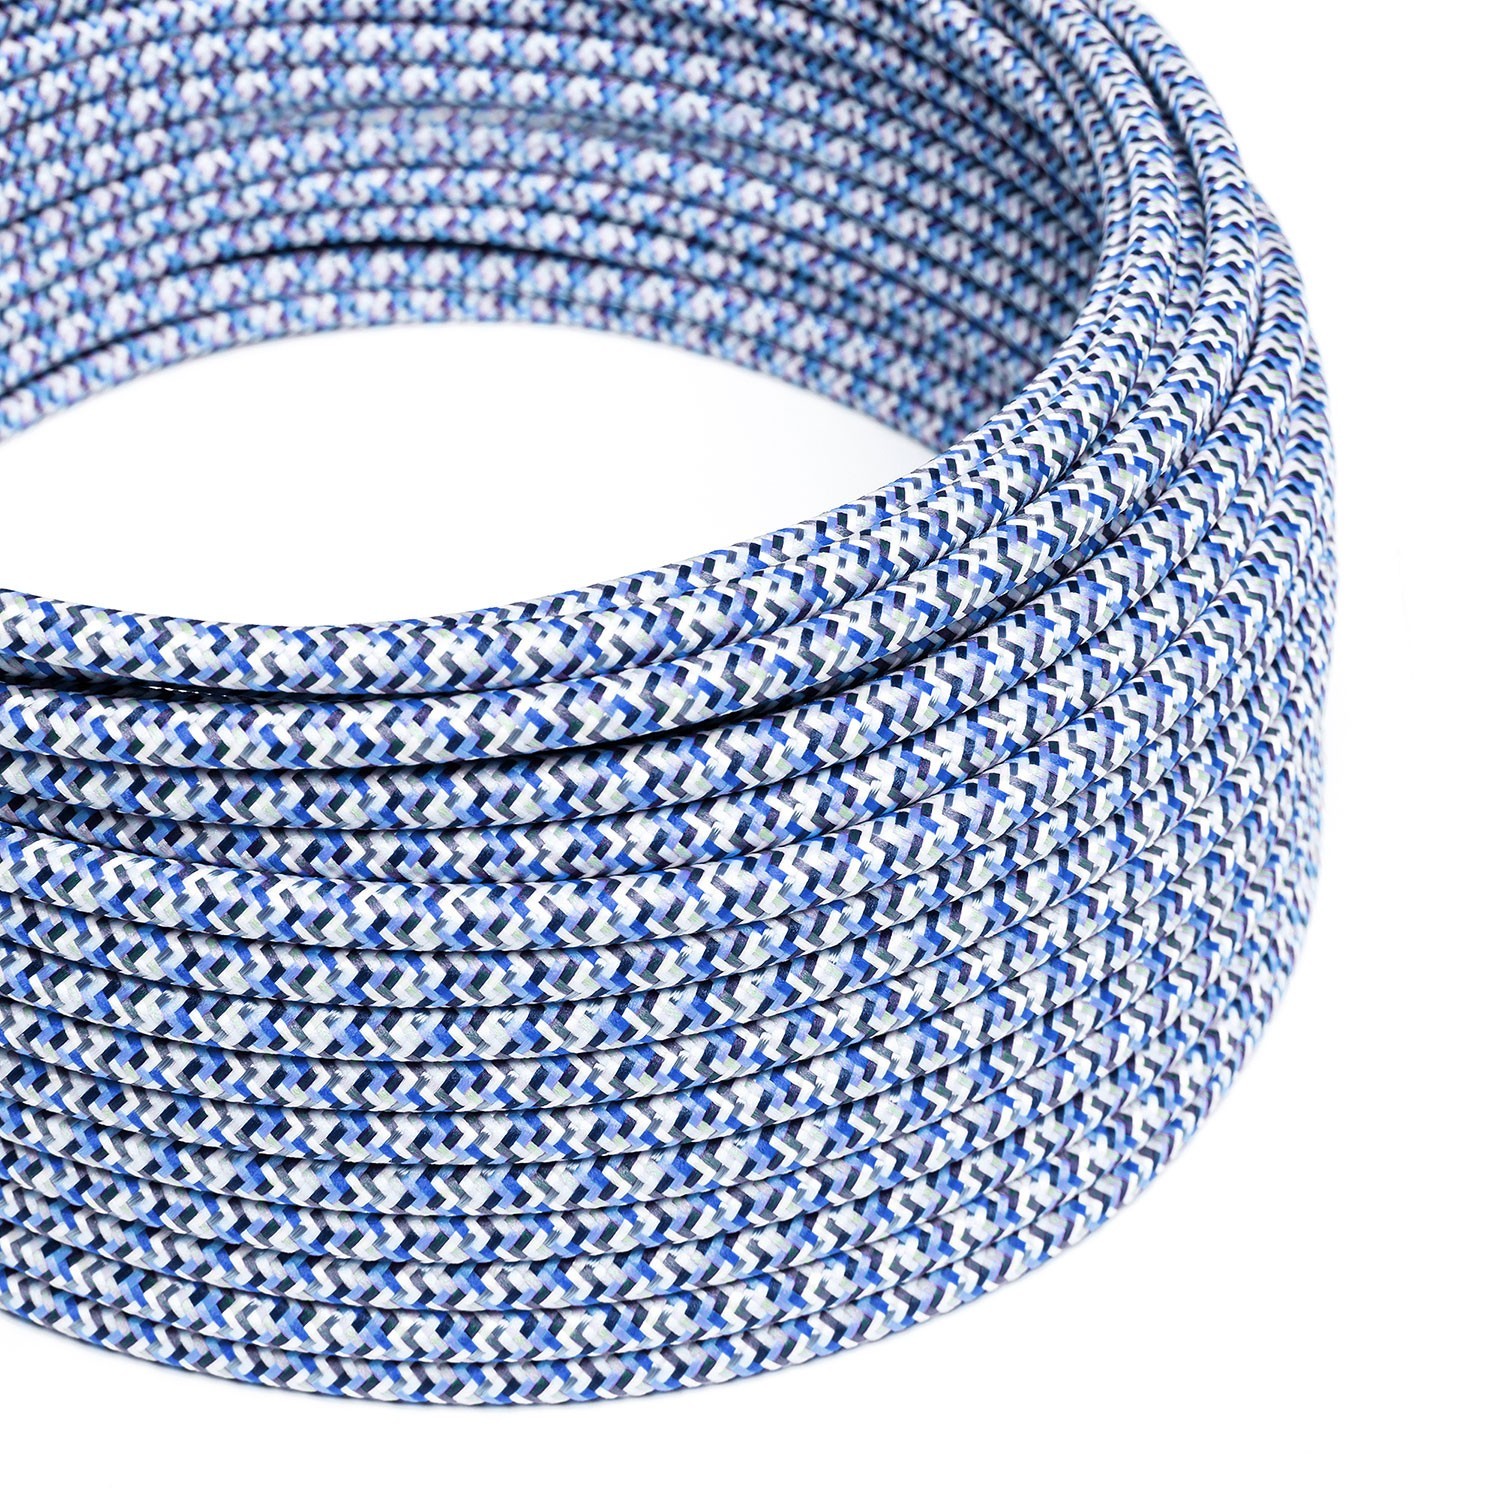 Okrúhly textilný elektrický kábel, umelý hodváb, pixelovaný, RX03 Pixel tyrkysová